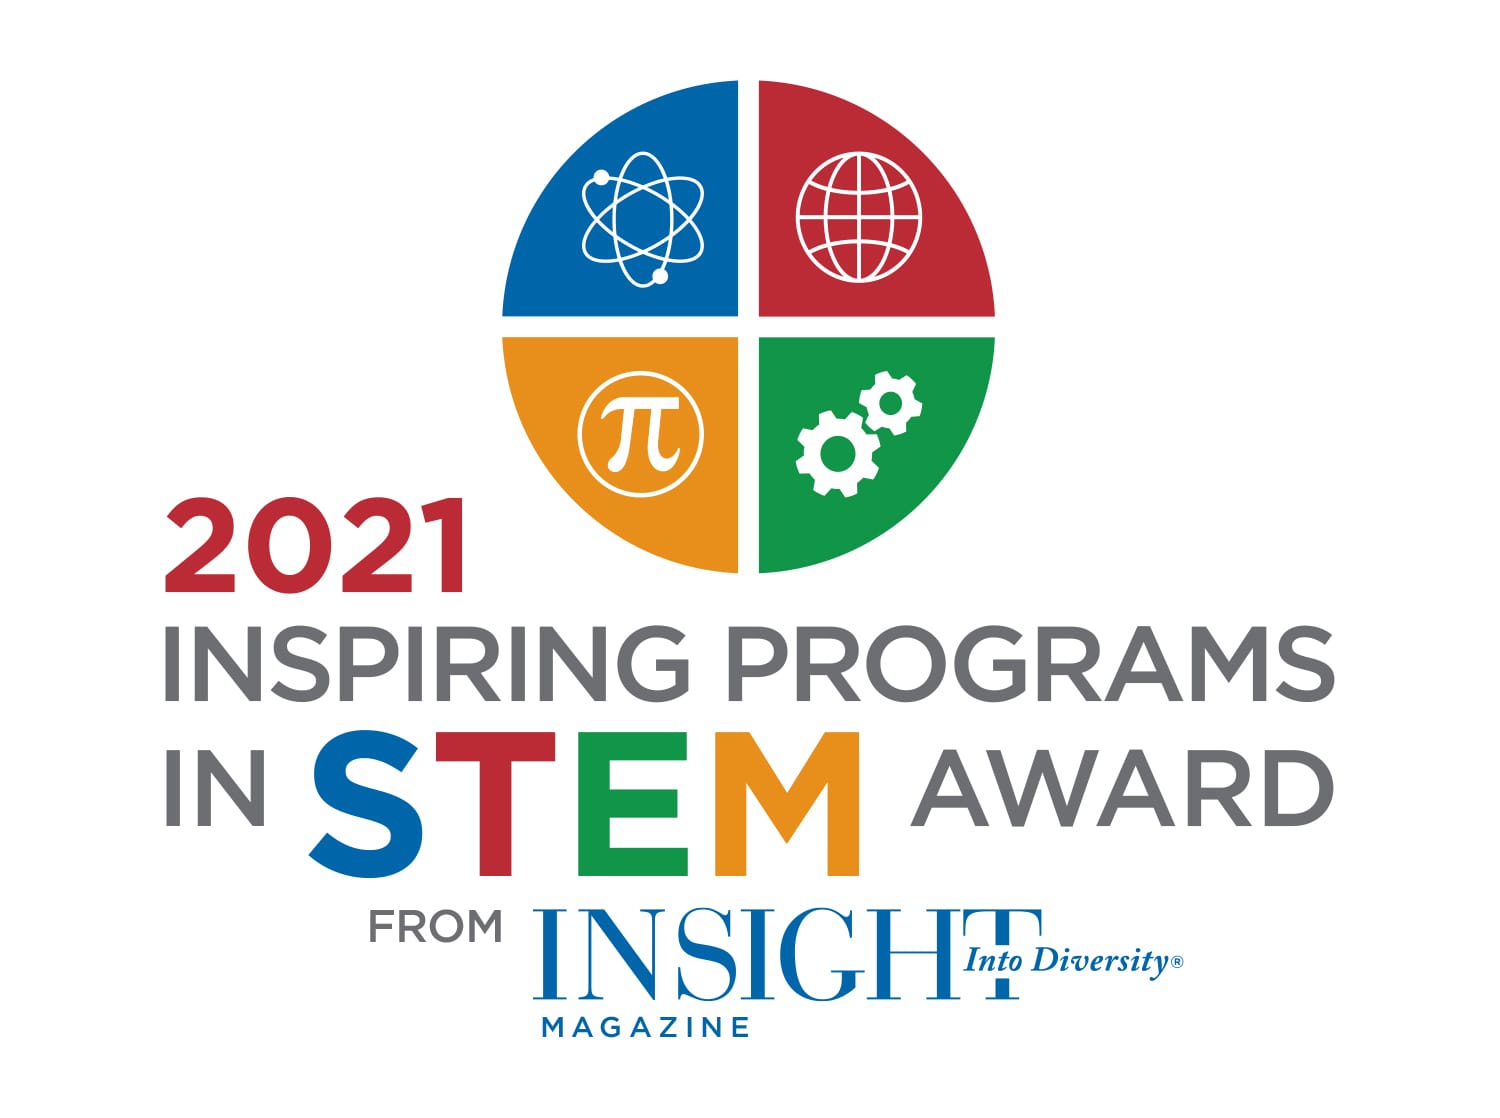 2021 Inspiring Programs in STEM Award from Insight Into Diversity